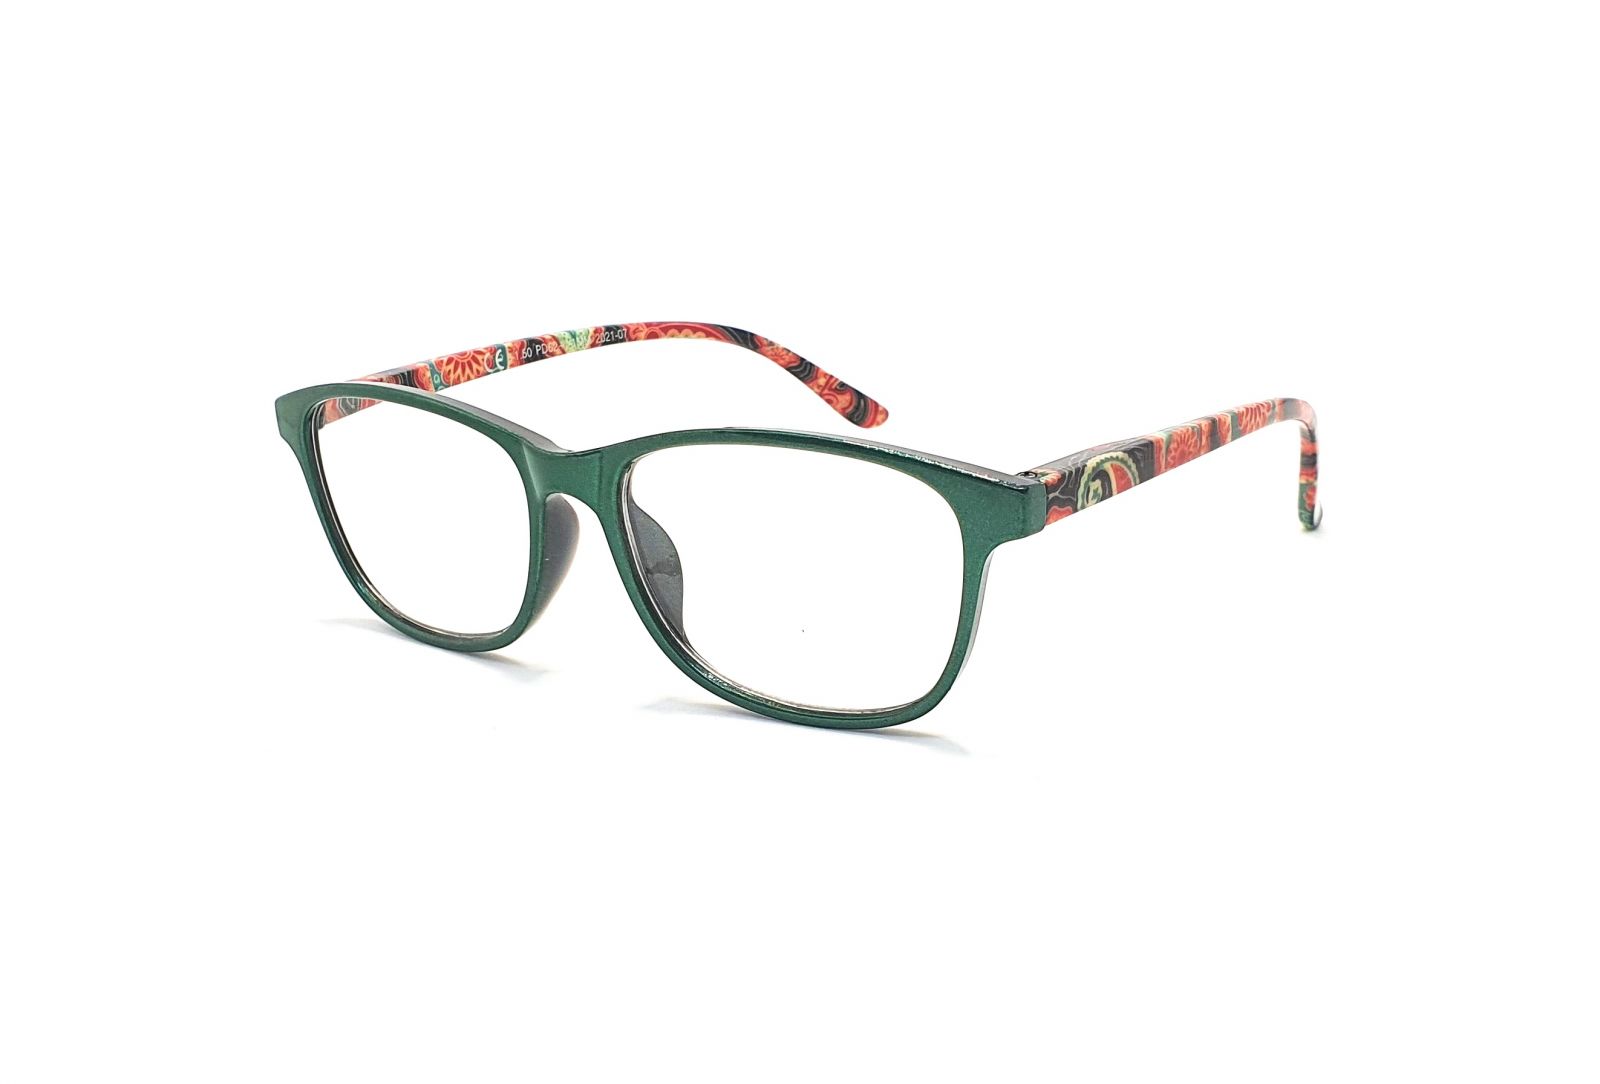 INfocus Dioptrické brýle R4150 / +2,00 flex green-mix